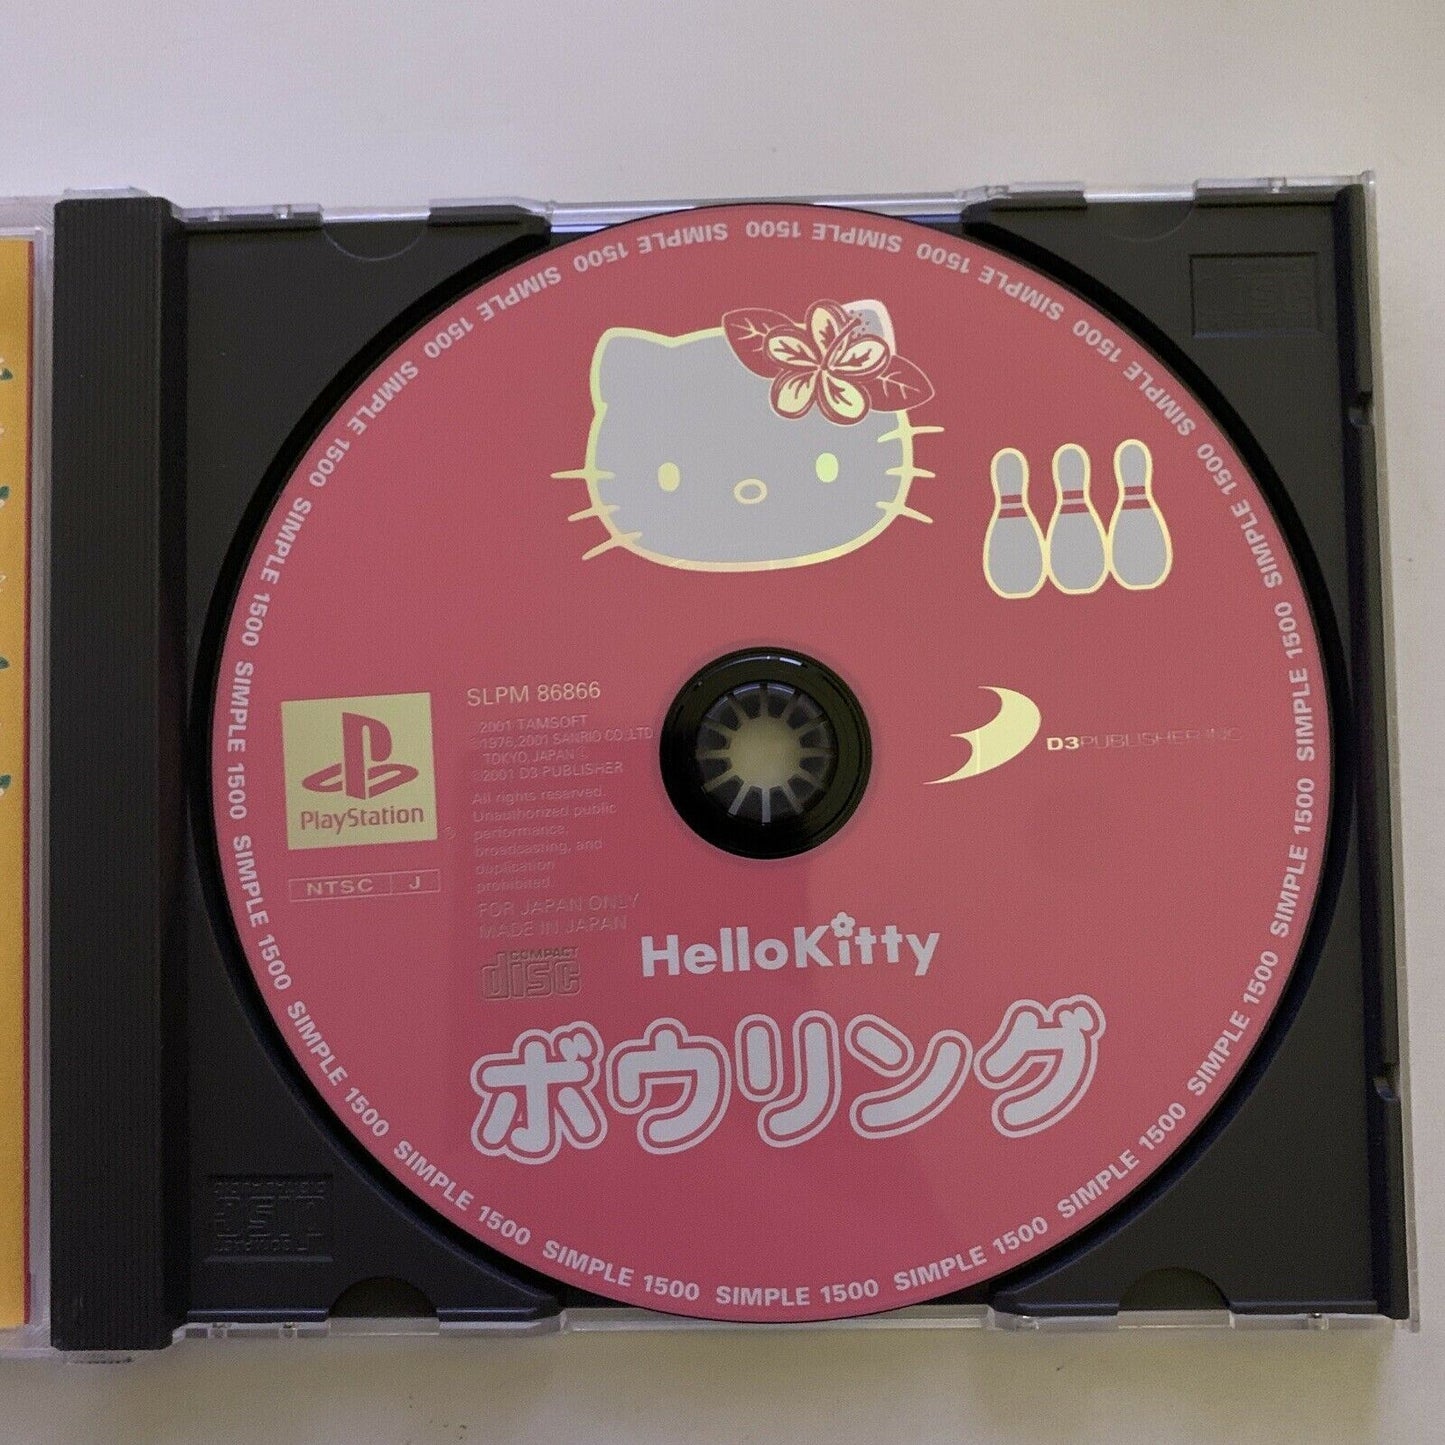 Hello Kitty Bowling - PlayStation PS1 NTSC-J Japan Game